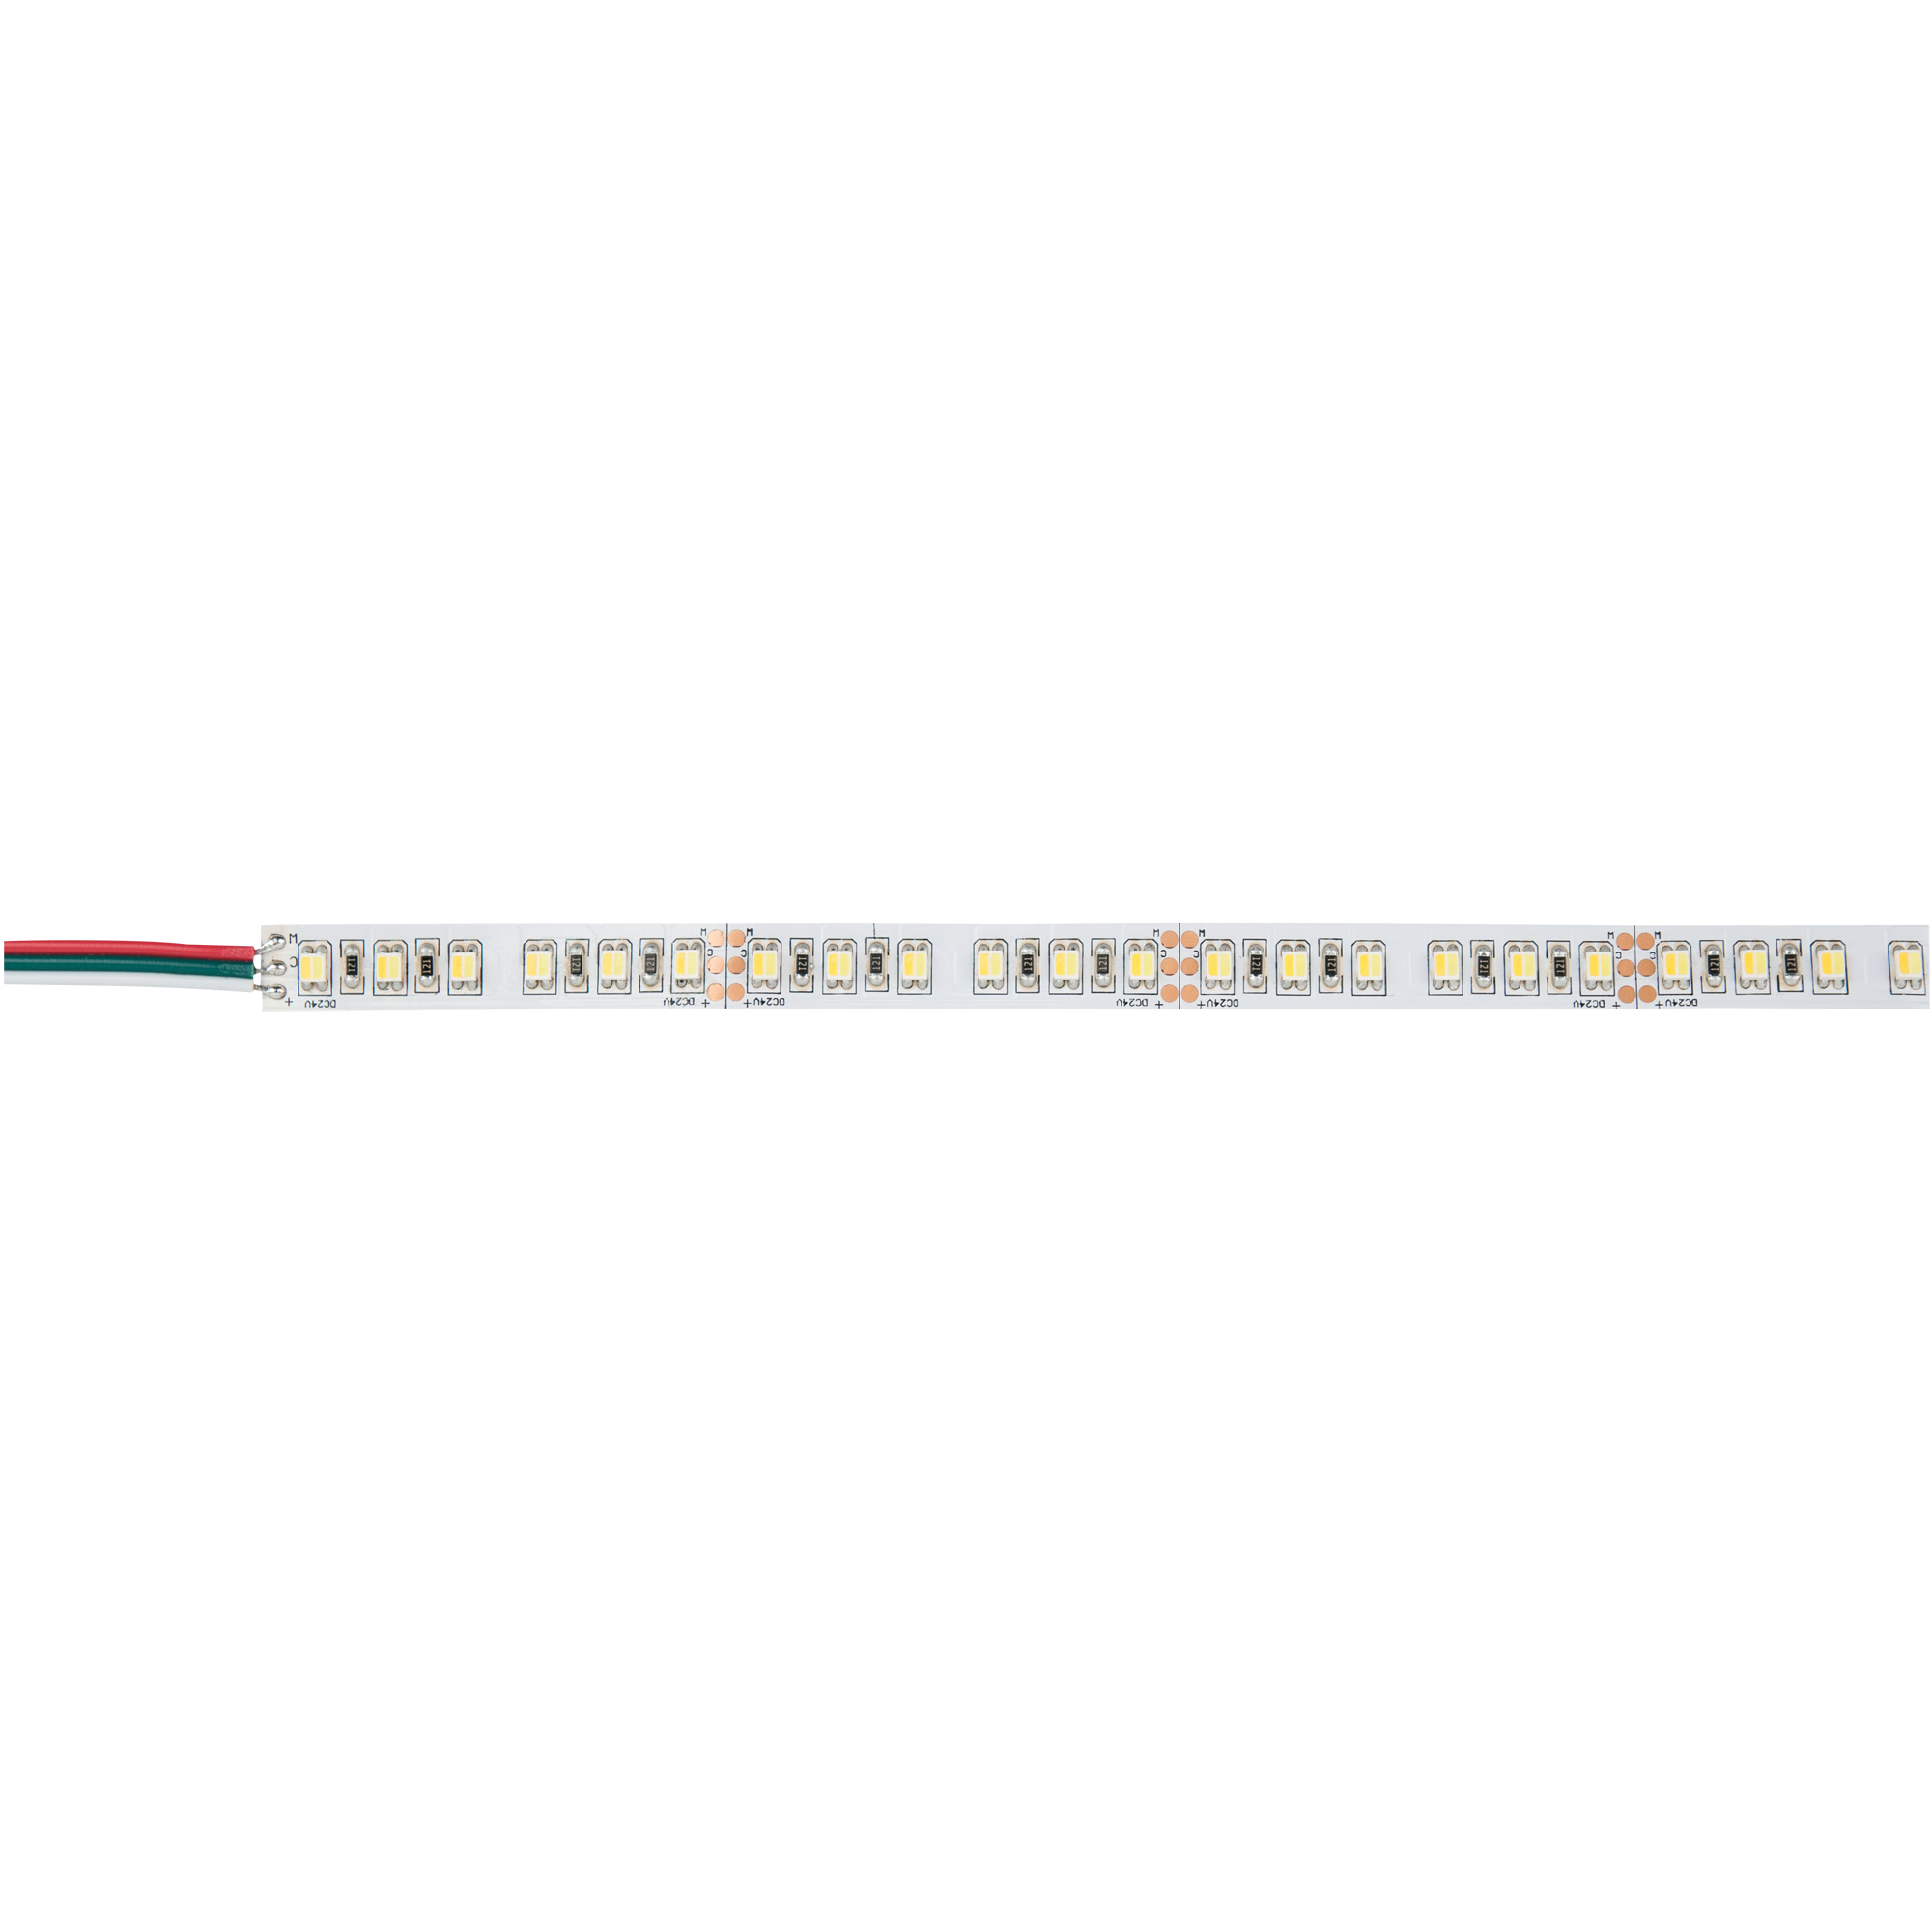 Artecta Havana Ribbon 3528 - 120 - CCT 5 m 3528 LED, anpassbare weiße Farbtemperatur